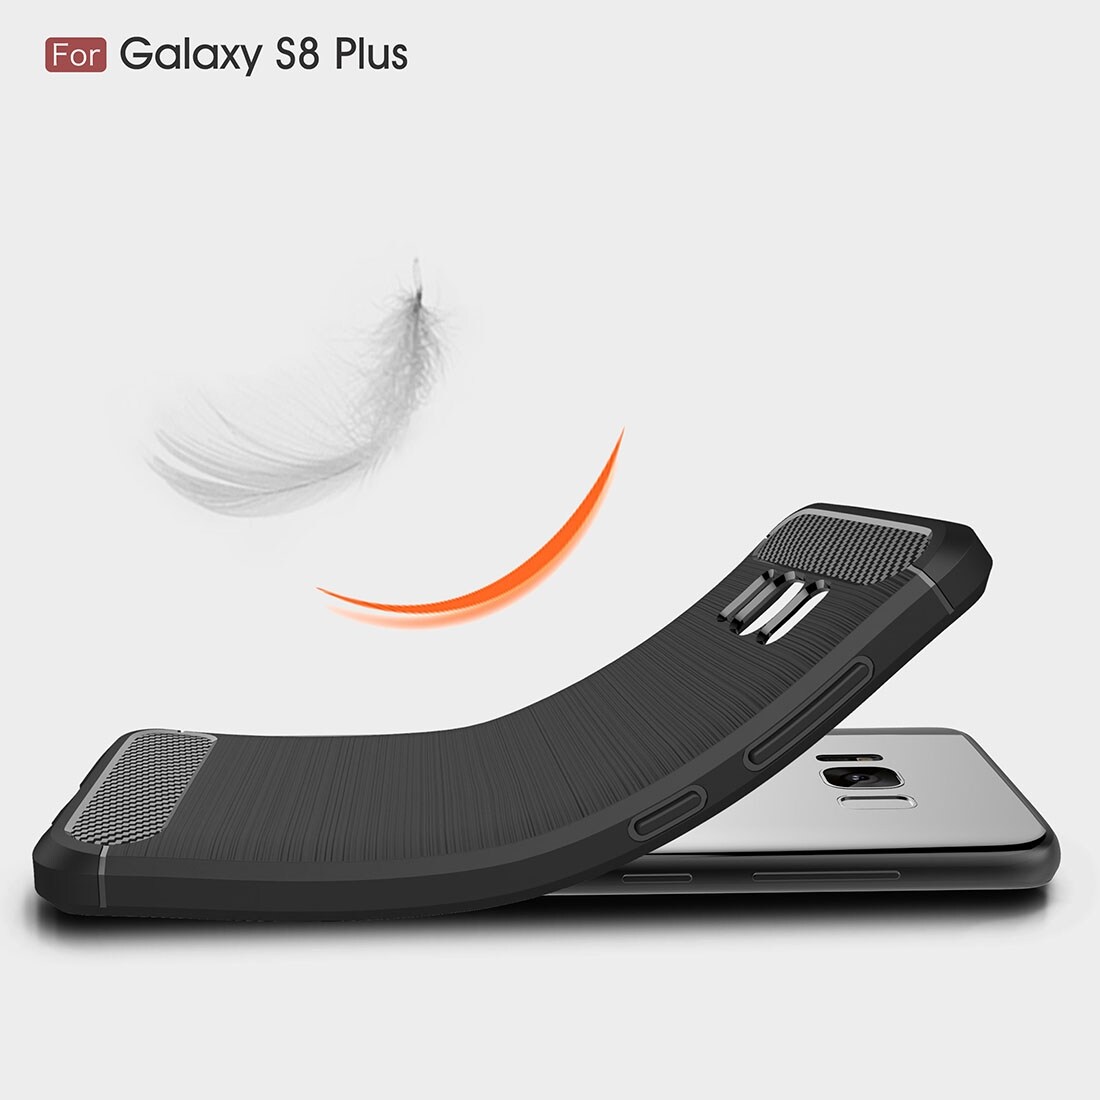 Shockproof mobilskal Samsung Galaxy S8 Plus